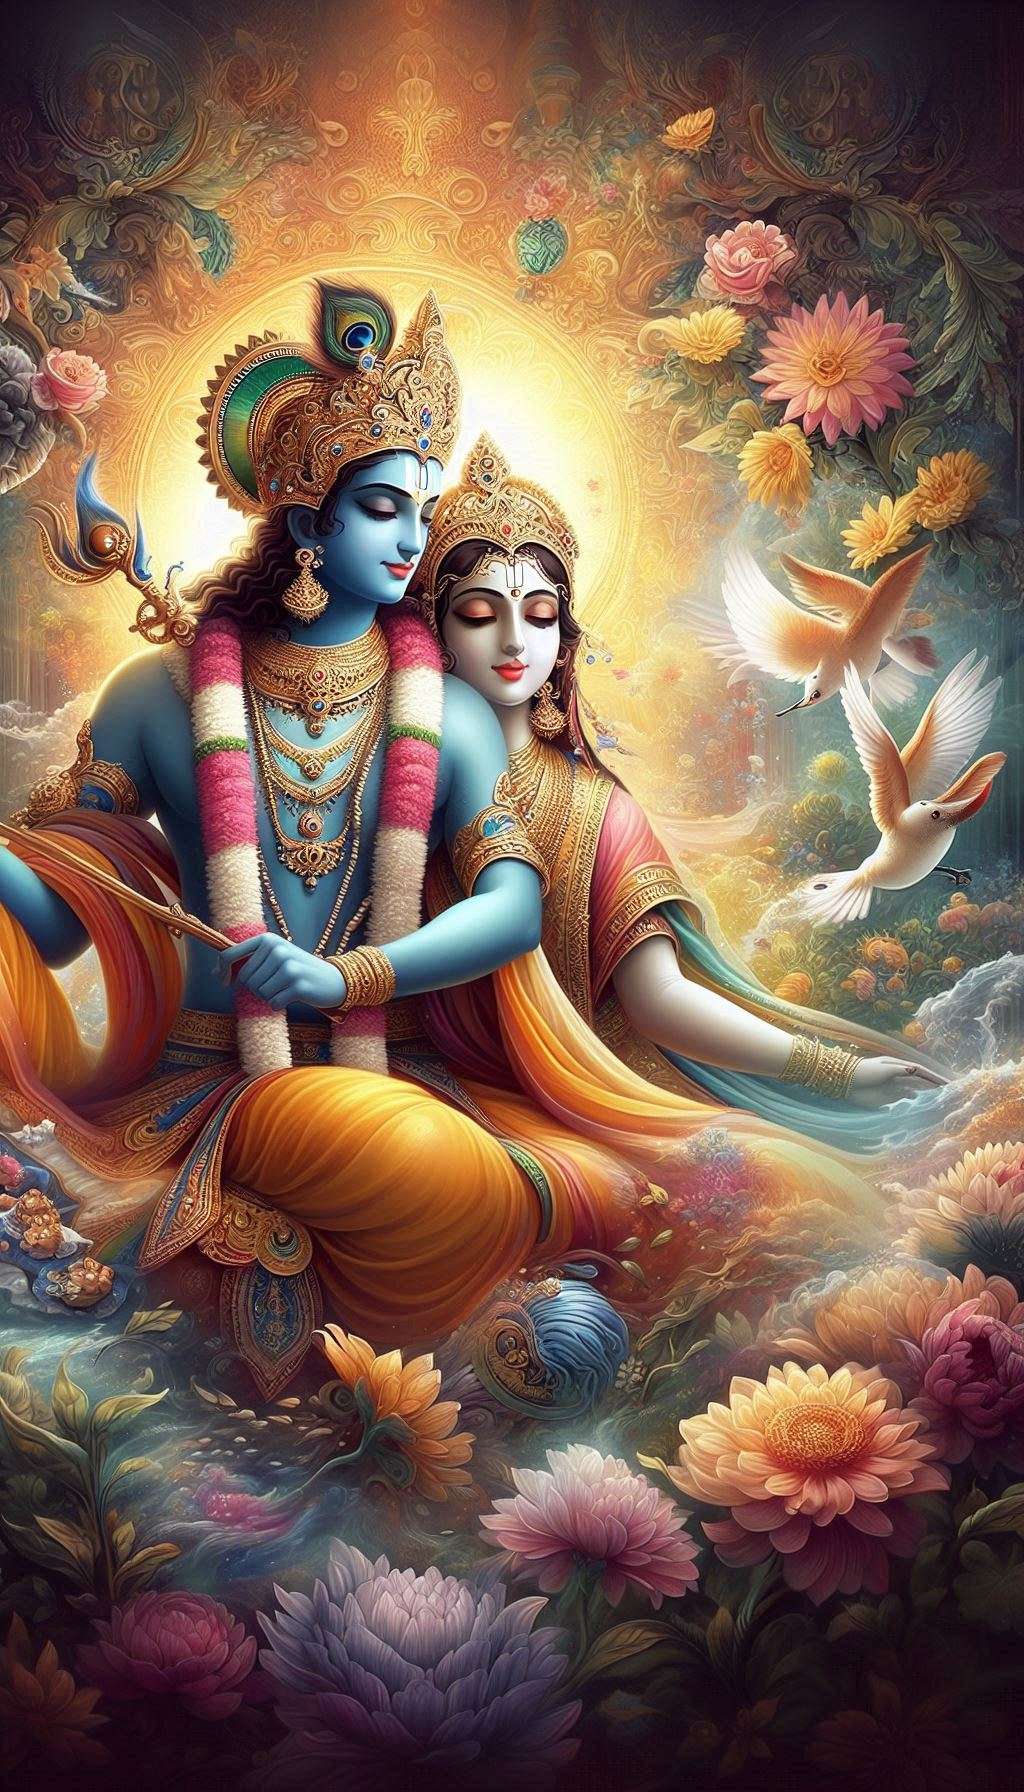 lord krishna and radha in artistic illustration